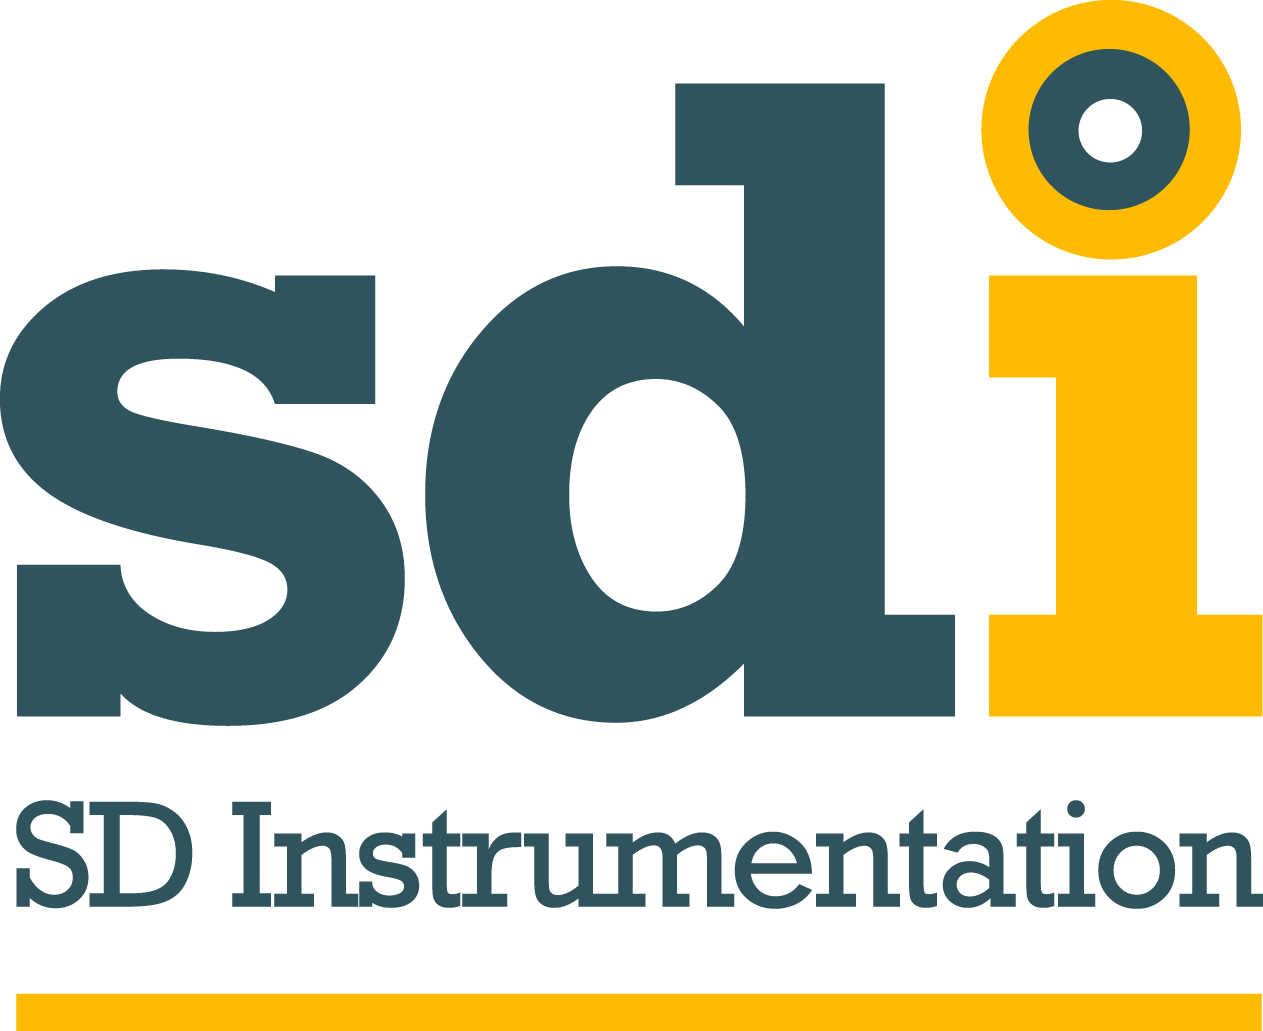 SDI | SD Instrumentation